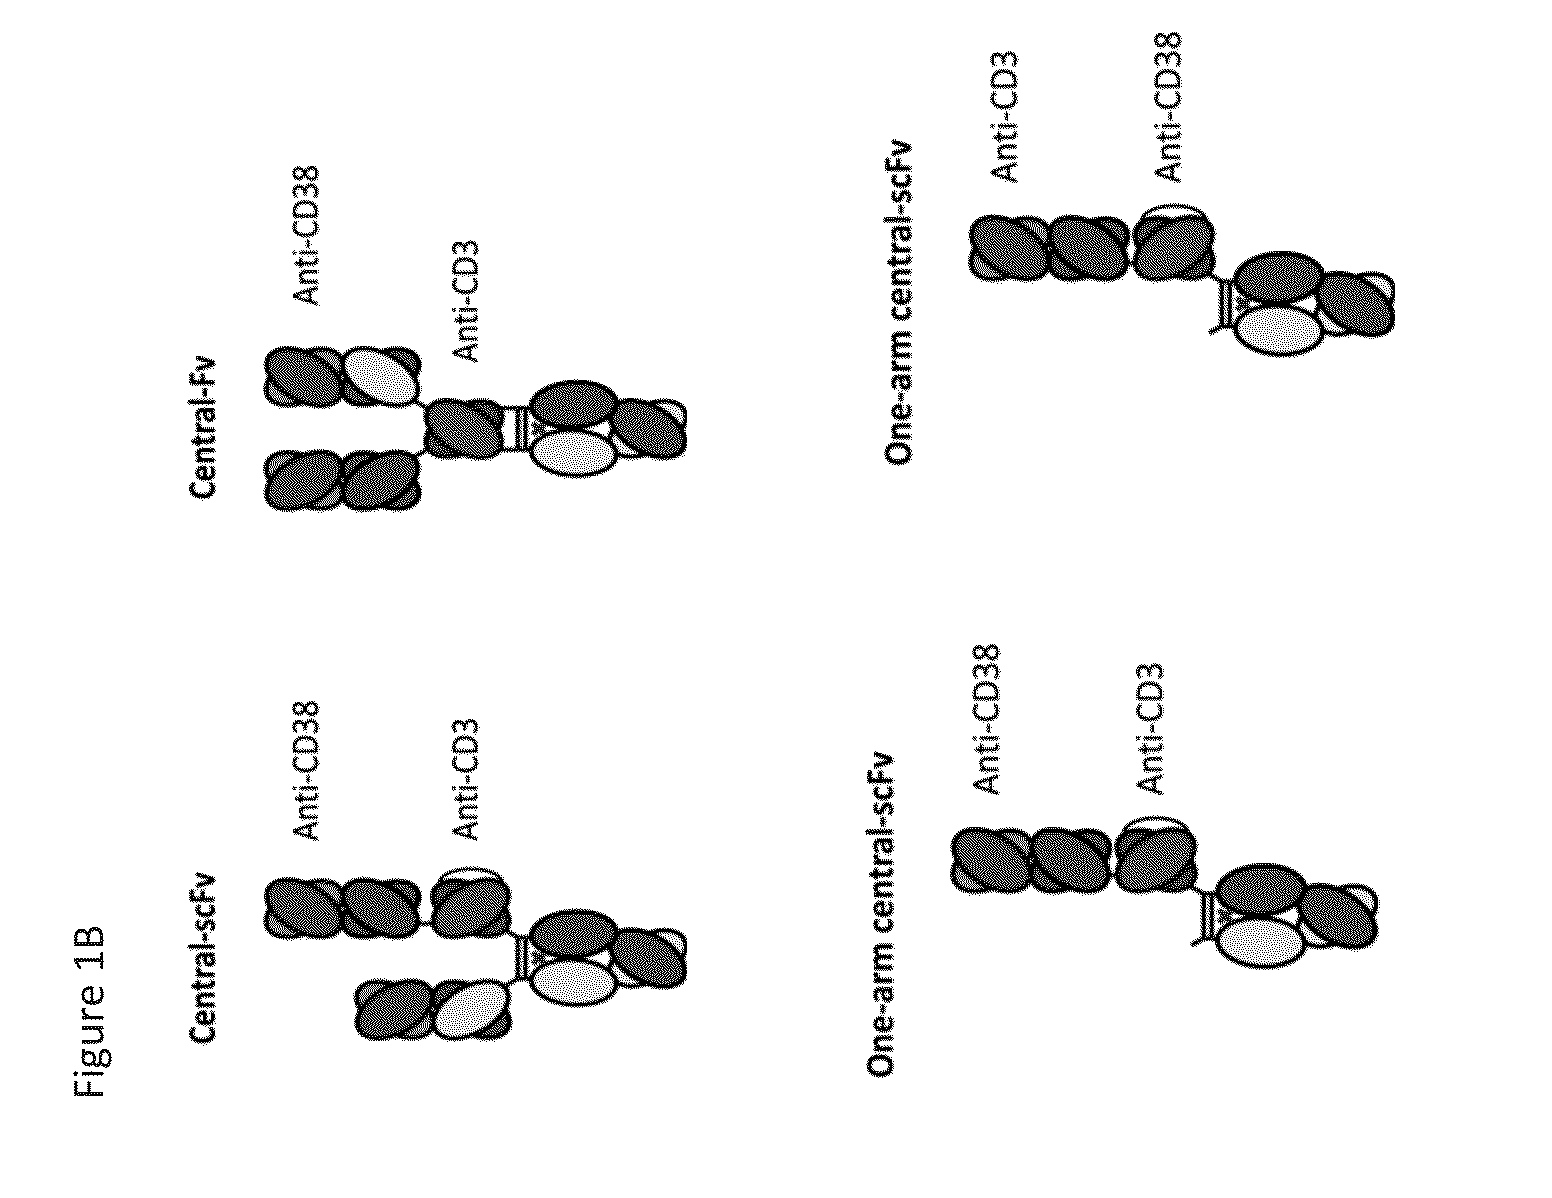 Heterodimeric antibodies that bind cd3 and cd38